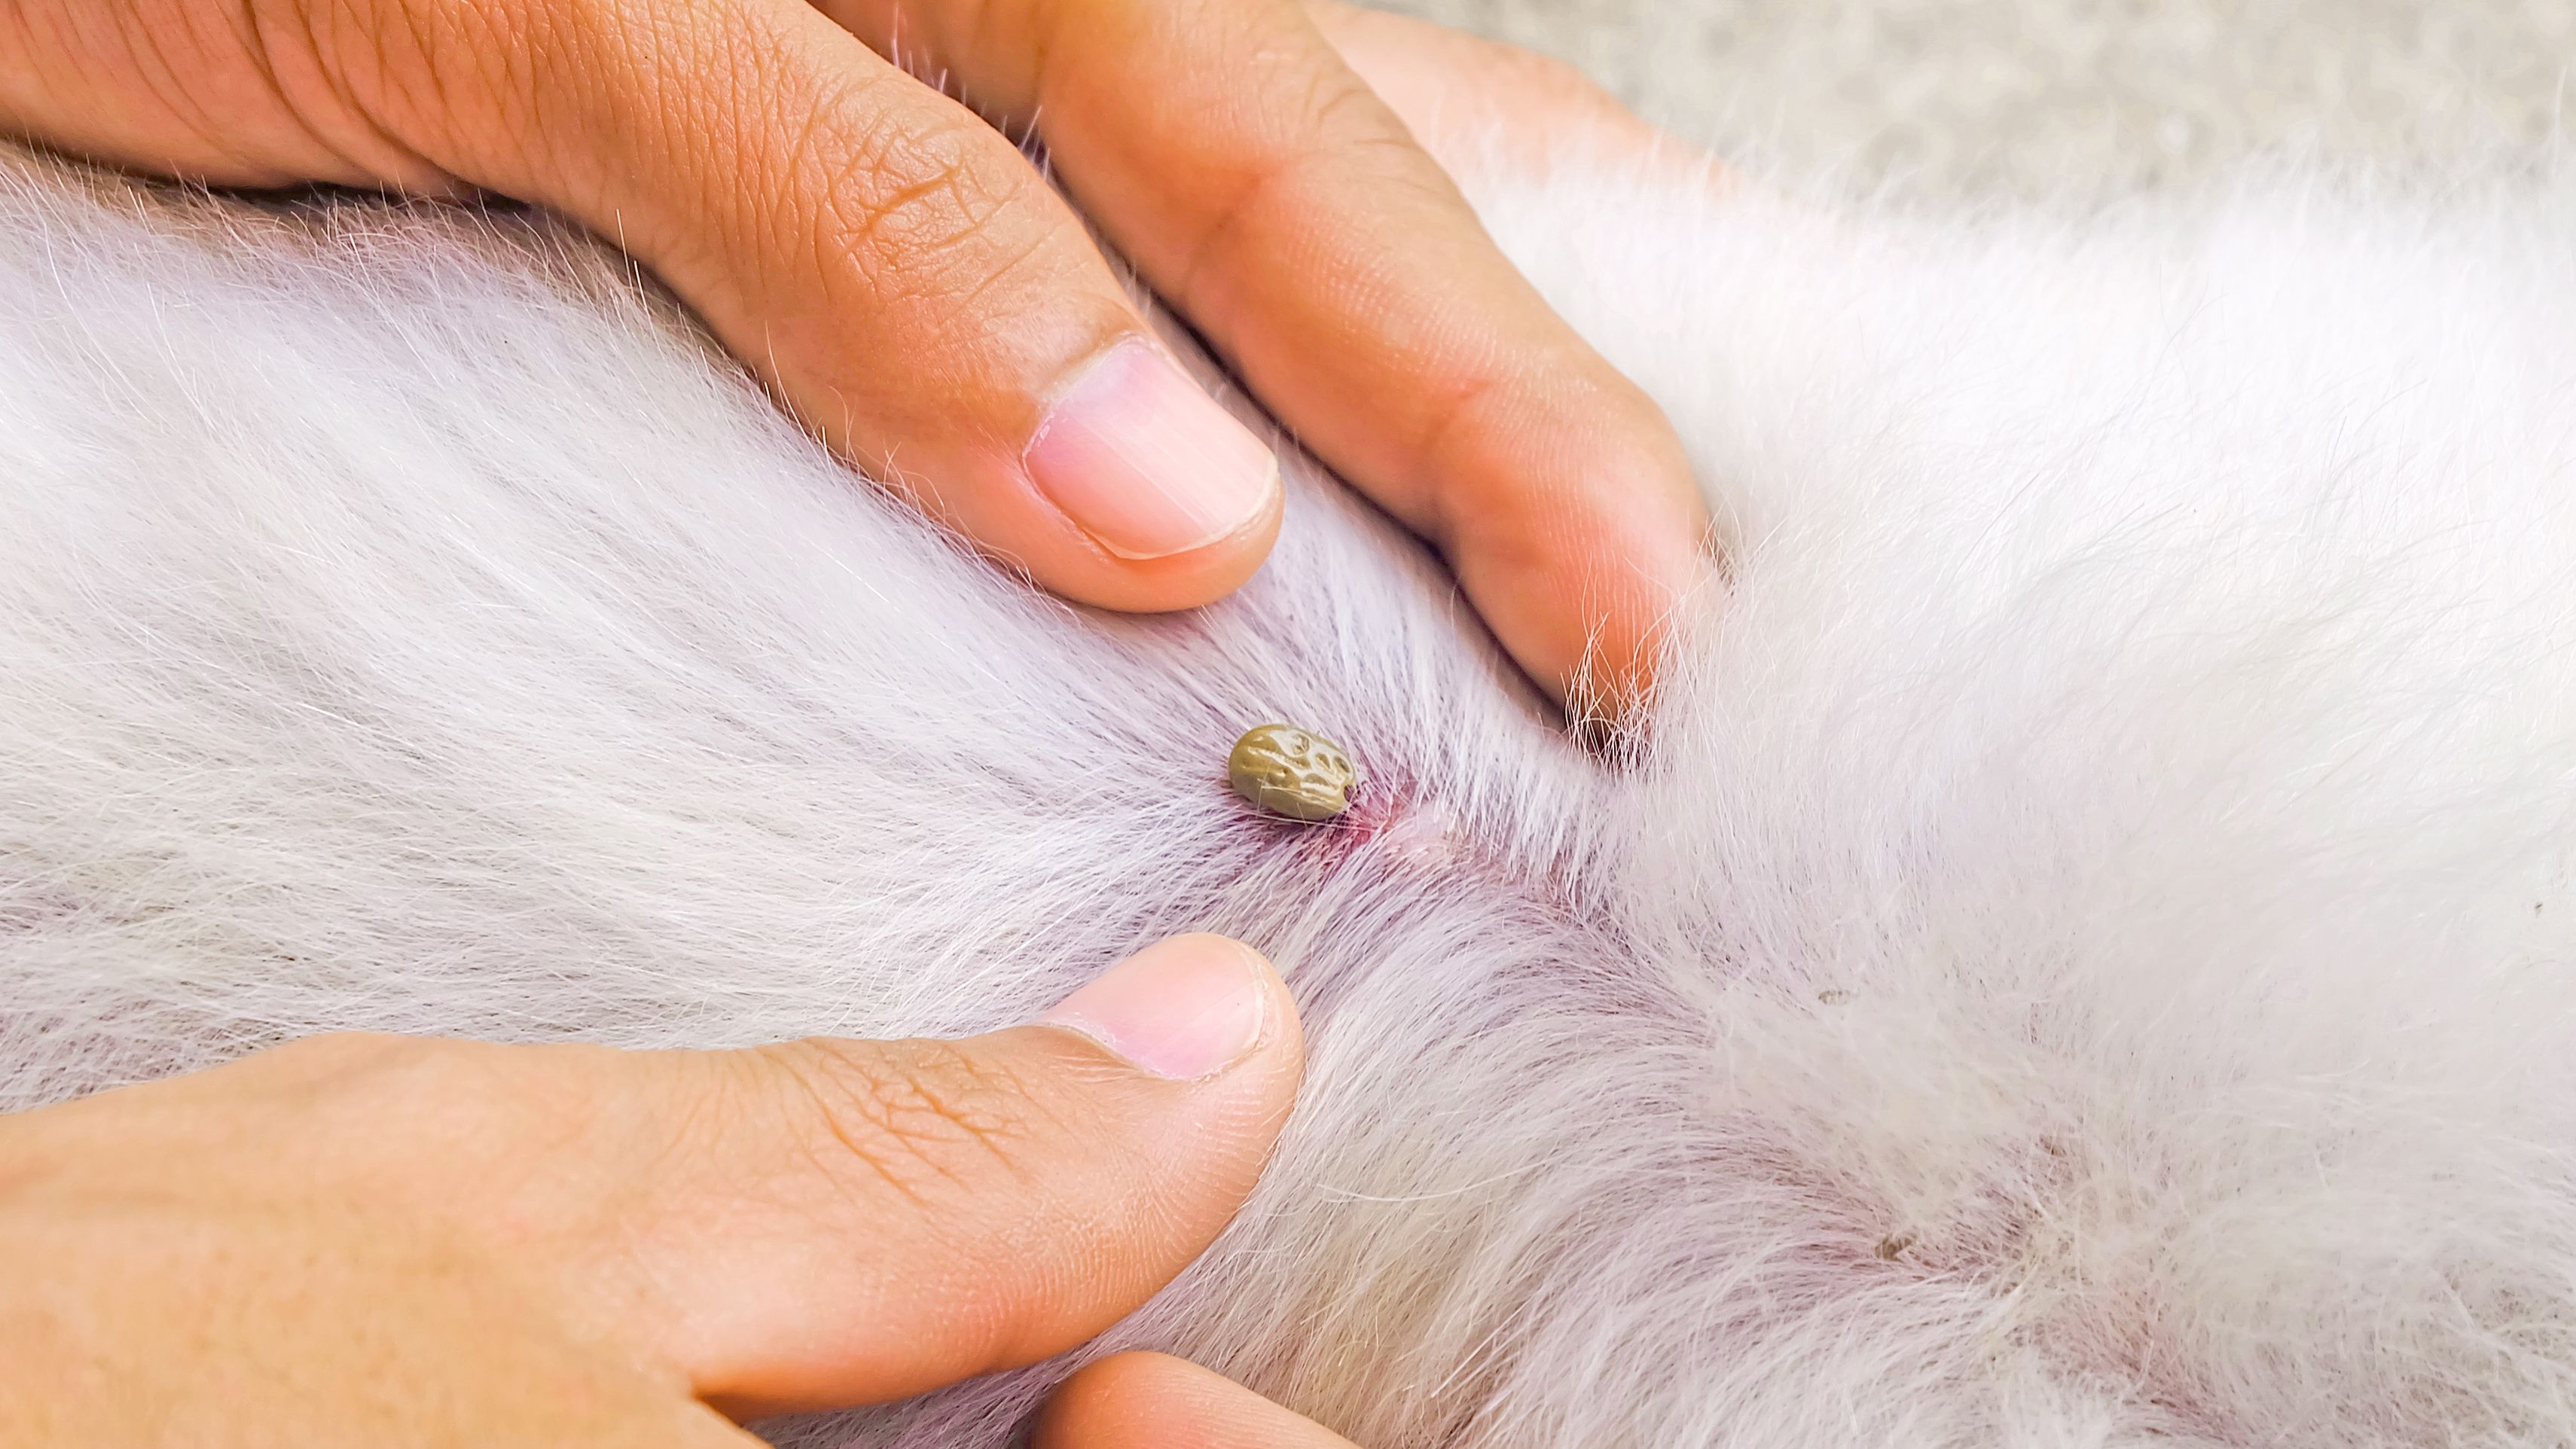 tick bite bump on dog